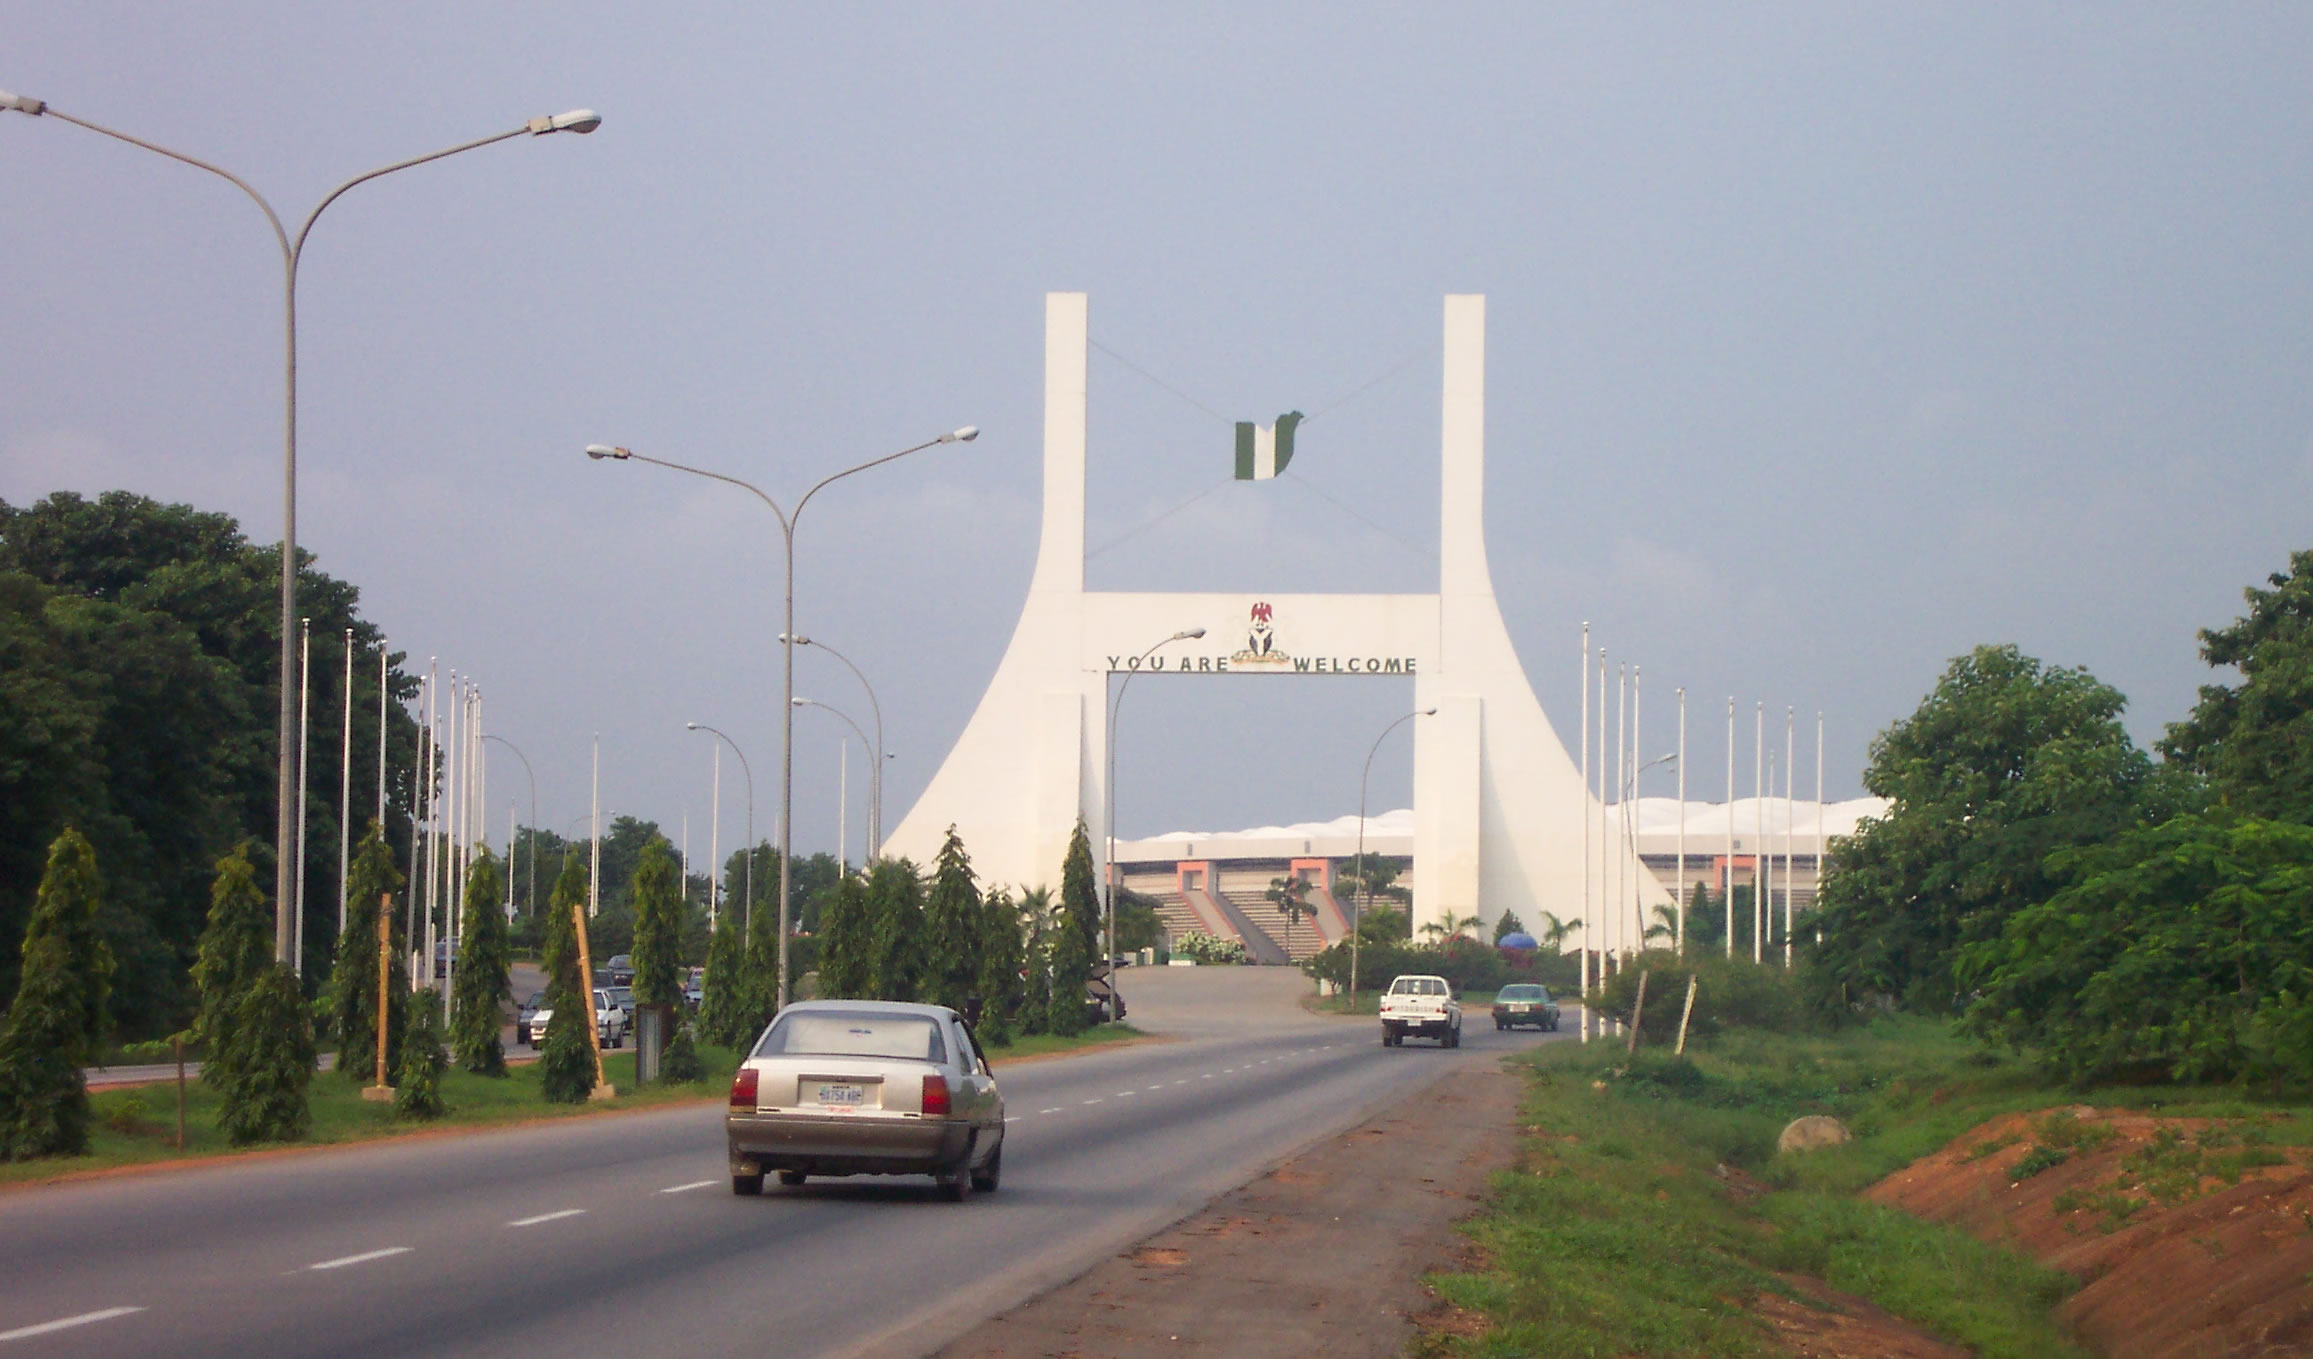 Abuja city